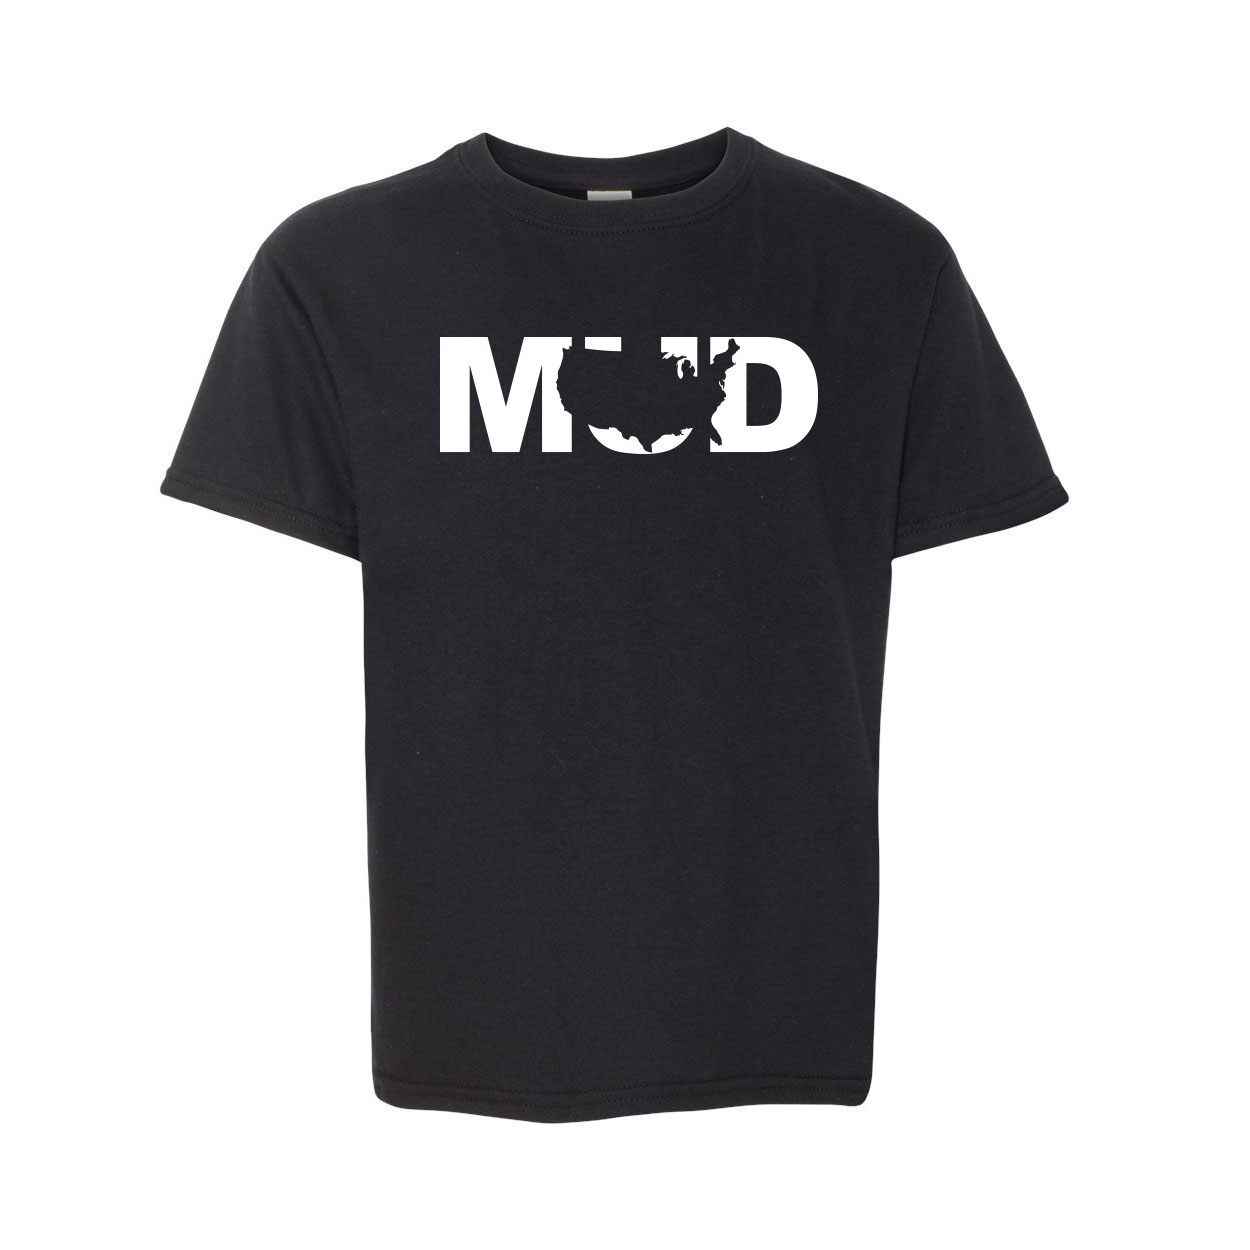 Mud United States Classic Youth T-Shirt Black (White Logo)